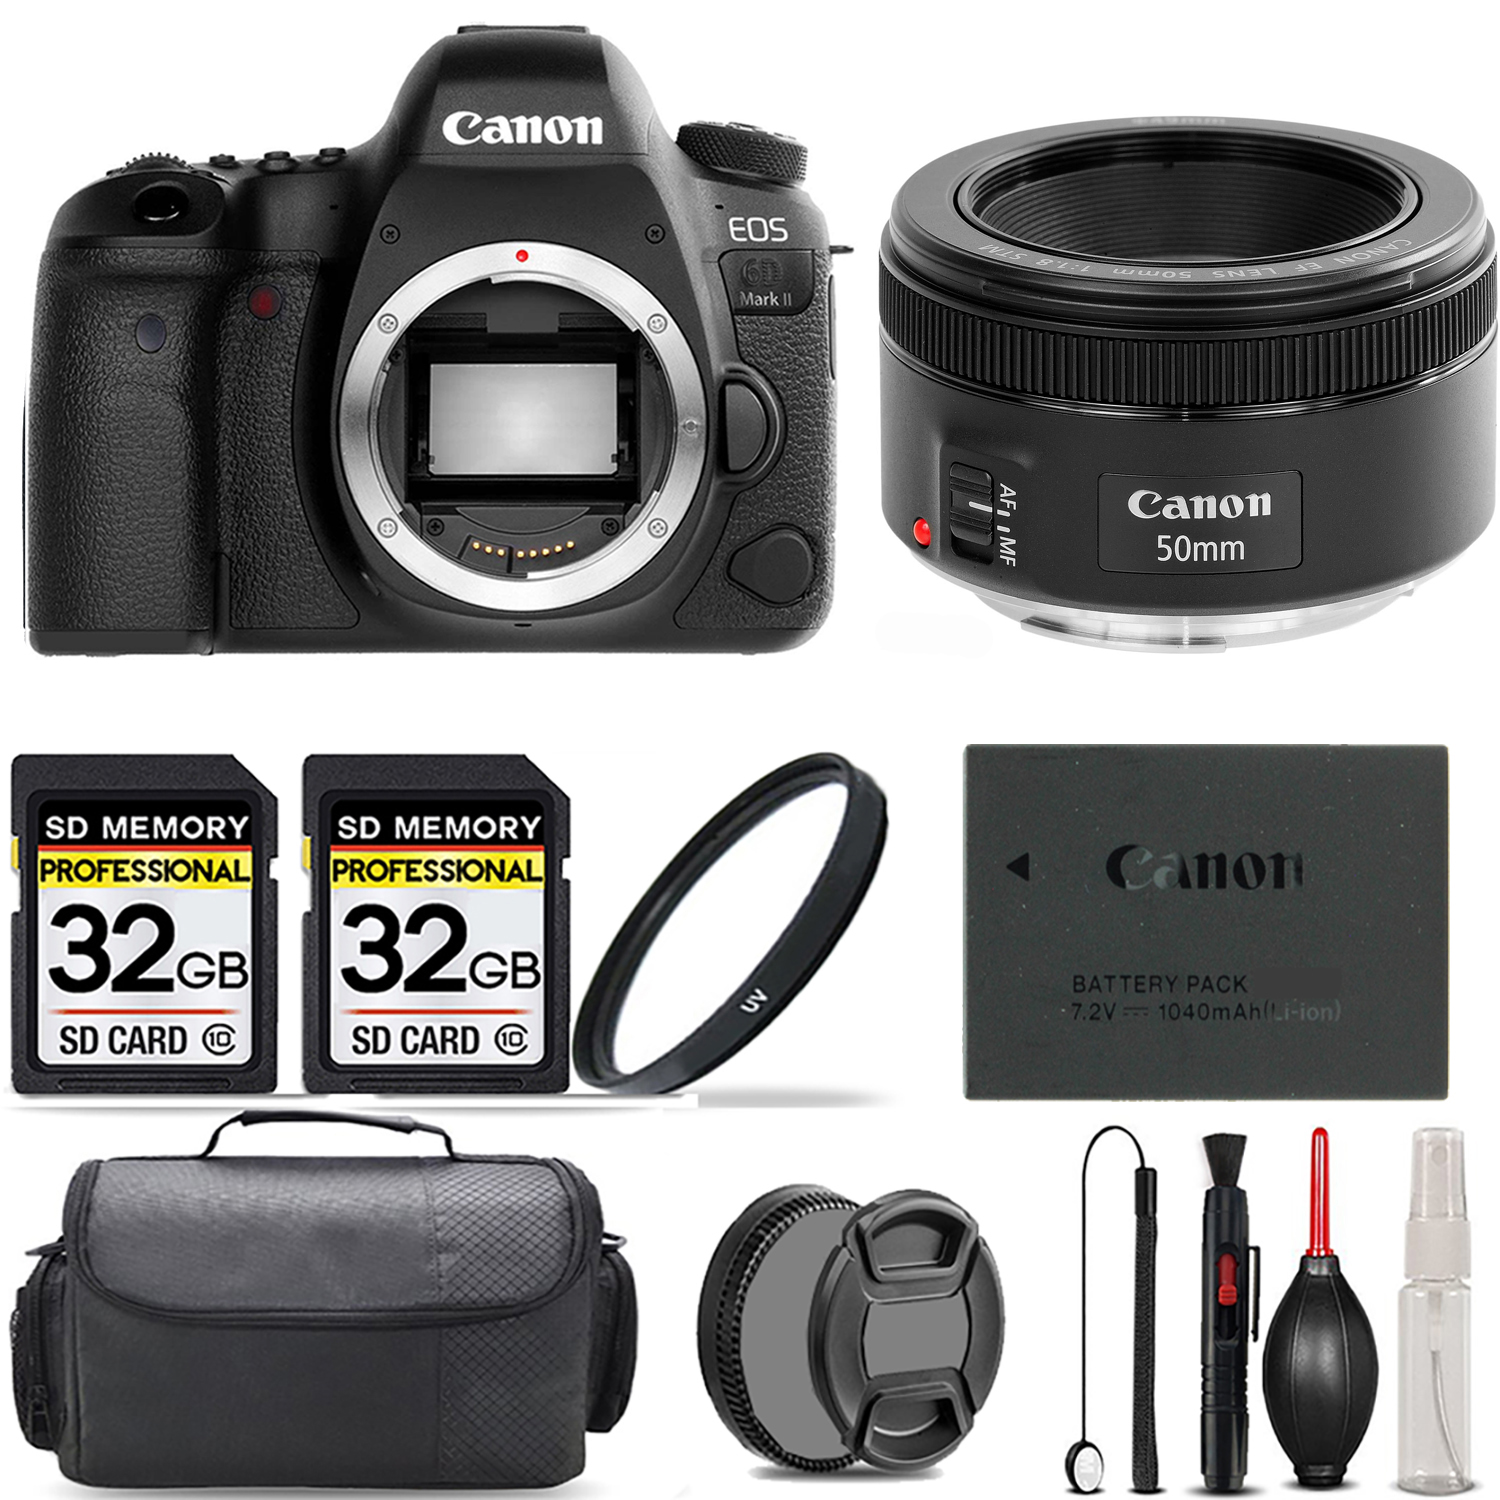 EOS 6D Mark II Camera + 50mm f/1.8 STM Lens + UV Filter +64GB +Bag & More! *FREE SHIPPING*